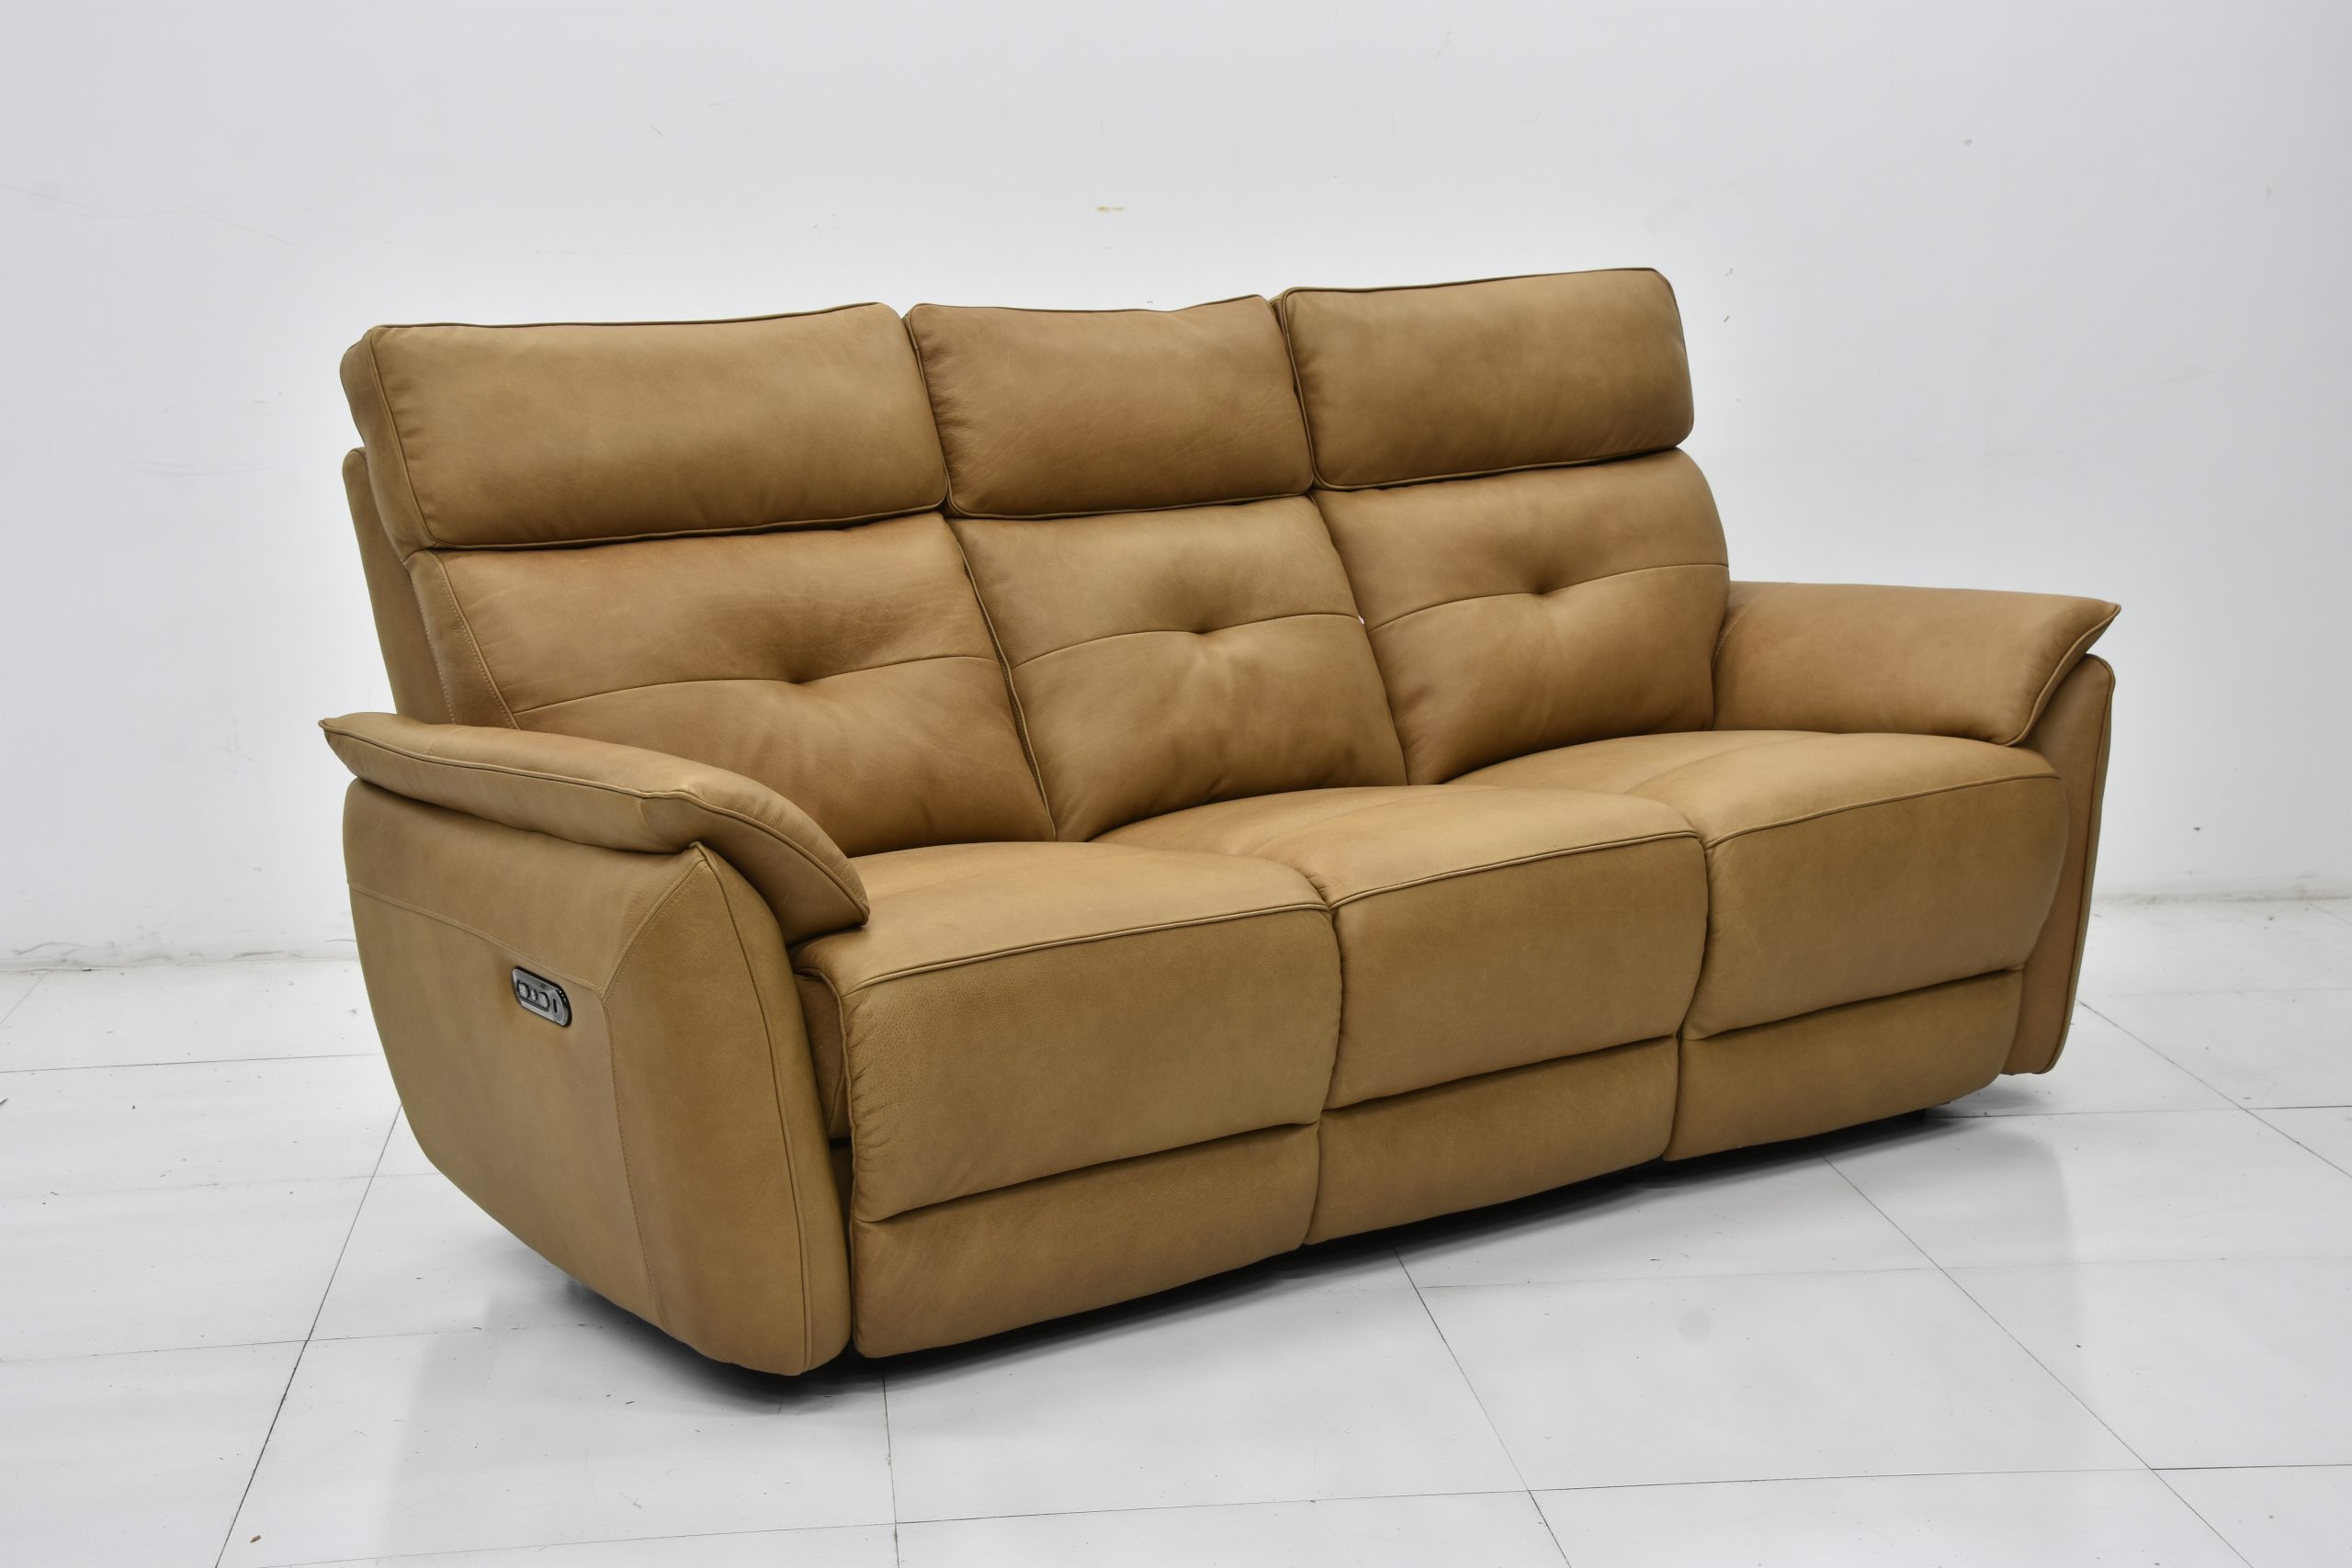 the petite kensington leather sofa